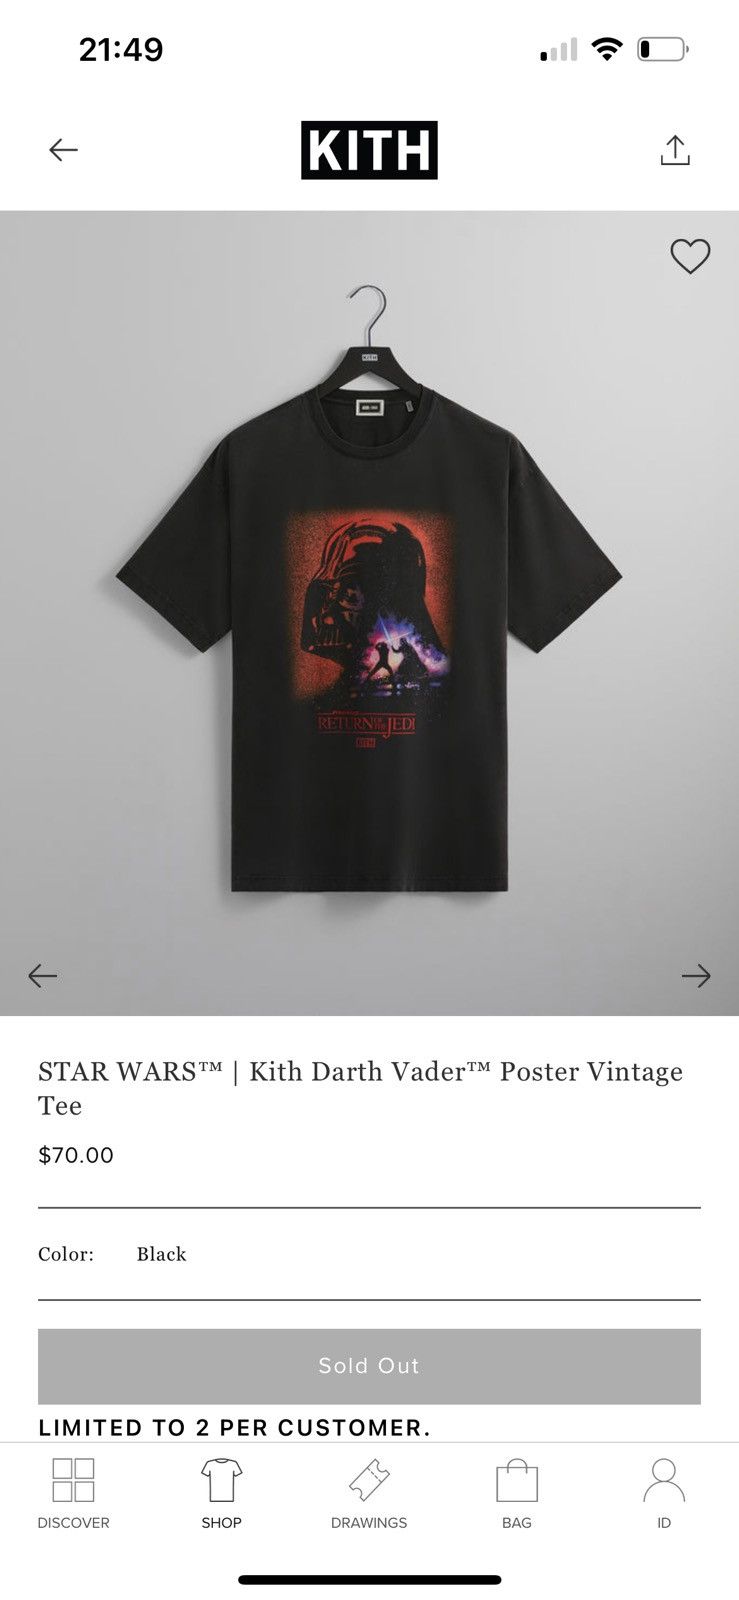 STAR WARS Kith Darth Vader XL